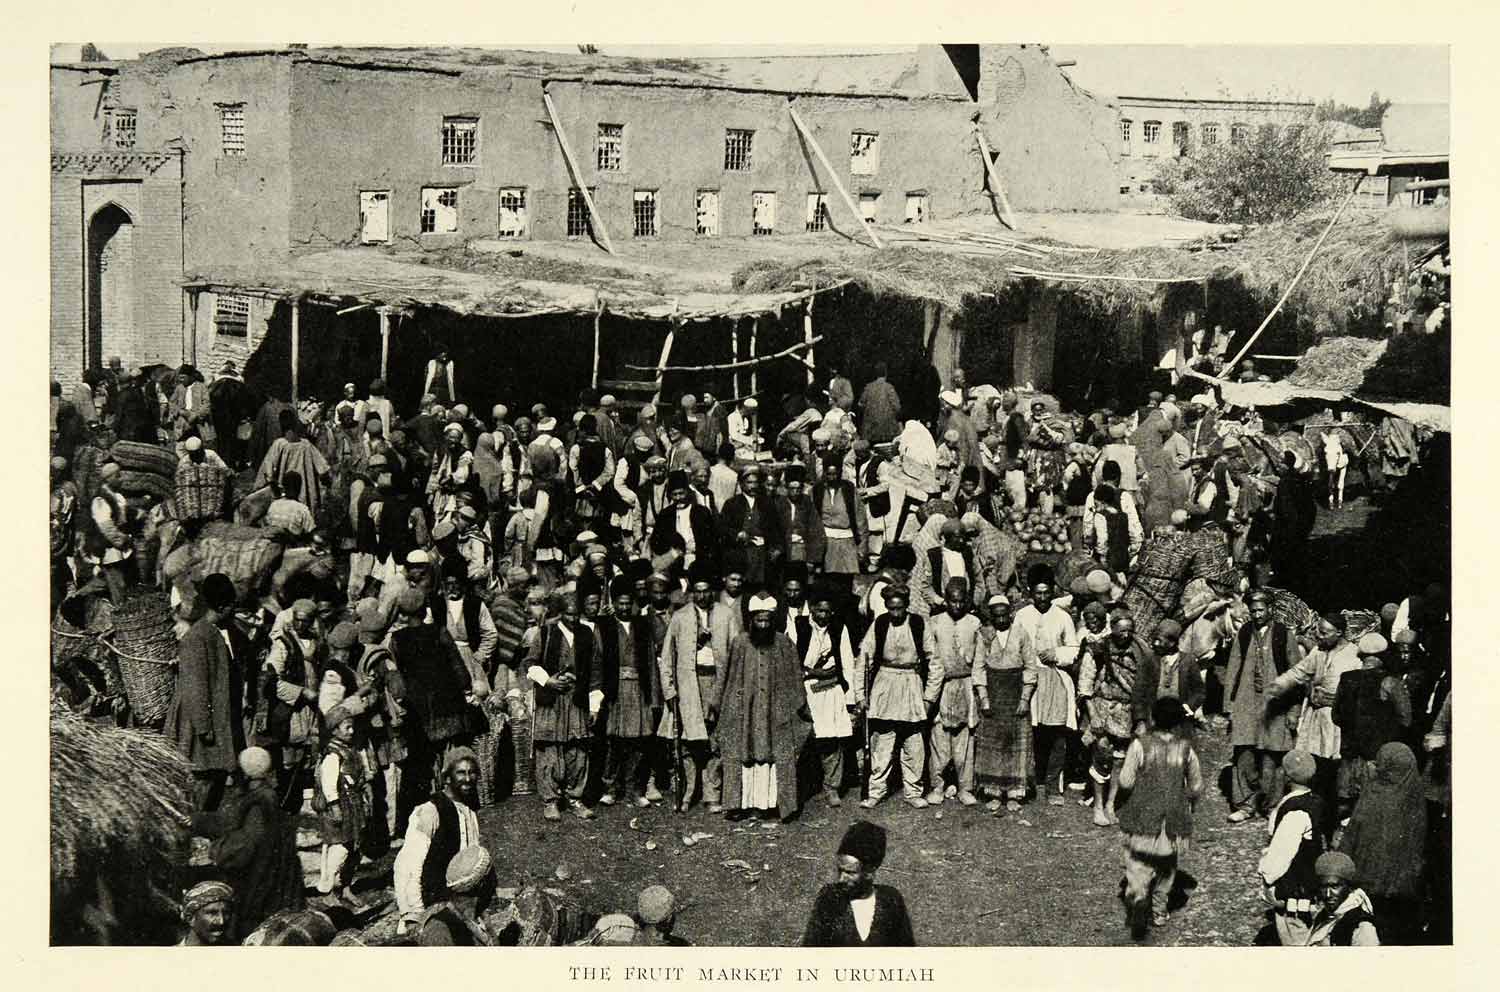 1921 Print Fruit Market Urumuah Iran Cityscape Crowd Traditional Wear NGM2